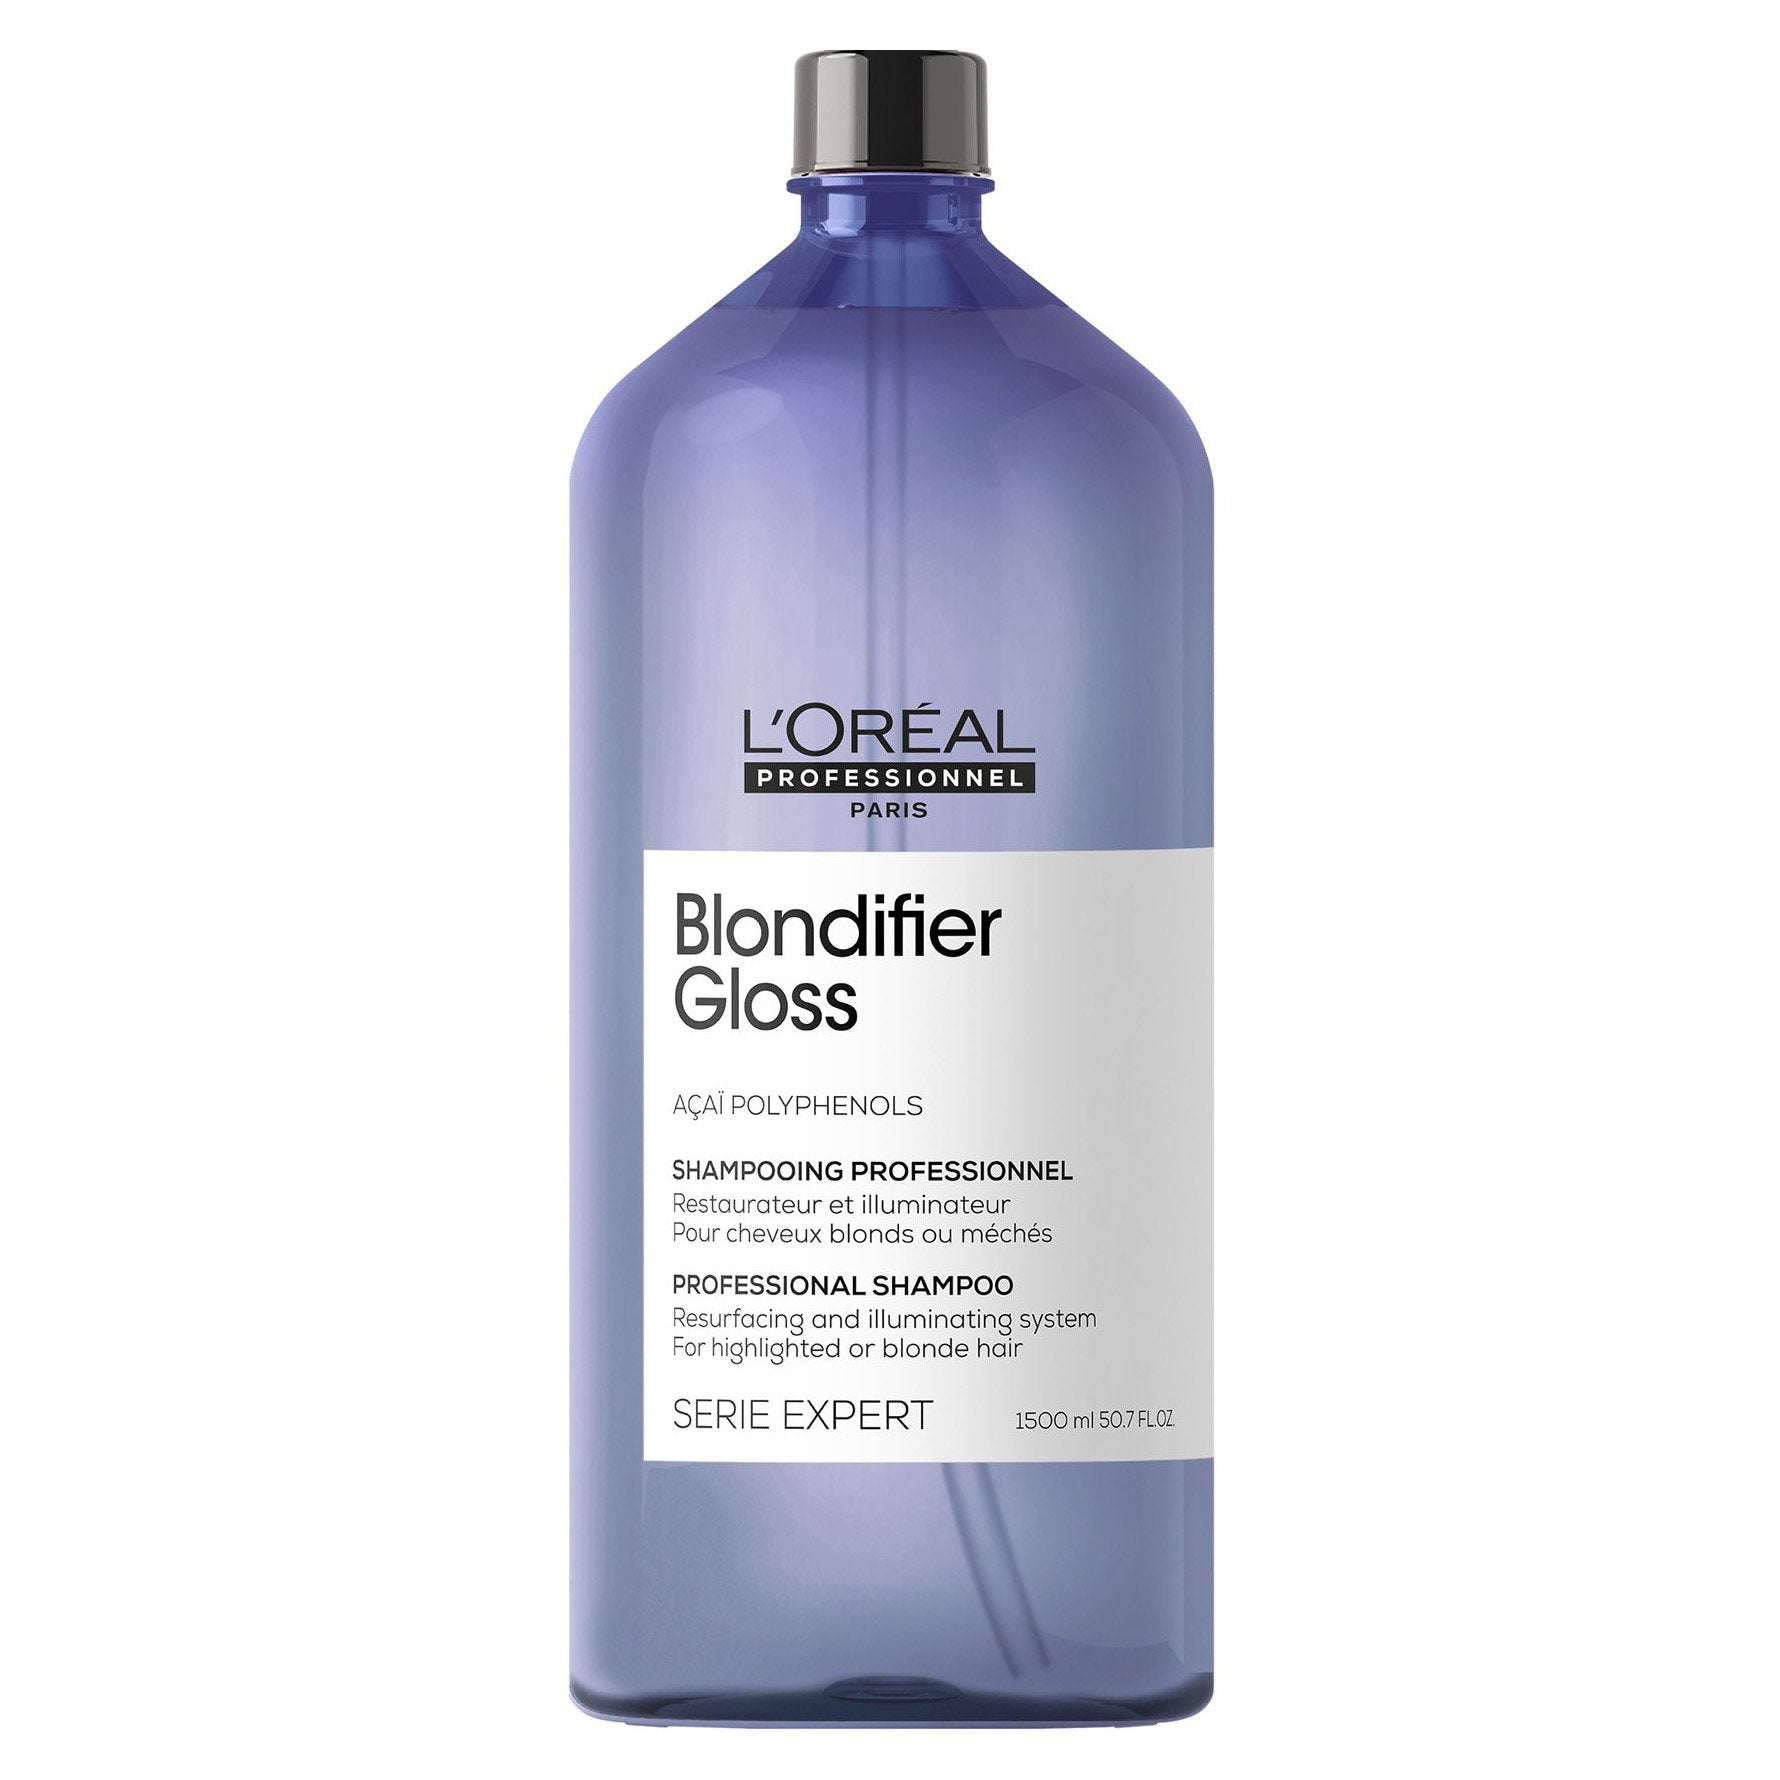 L'oreal Professionnel Blondifier Gloss Shampoo 1500ml